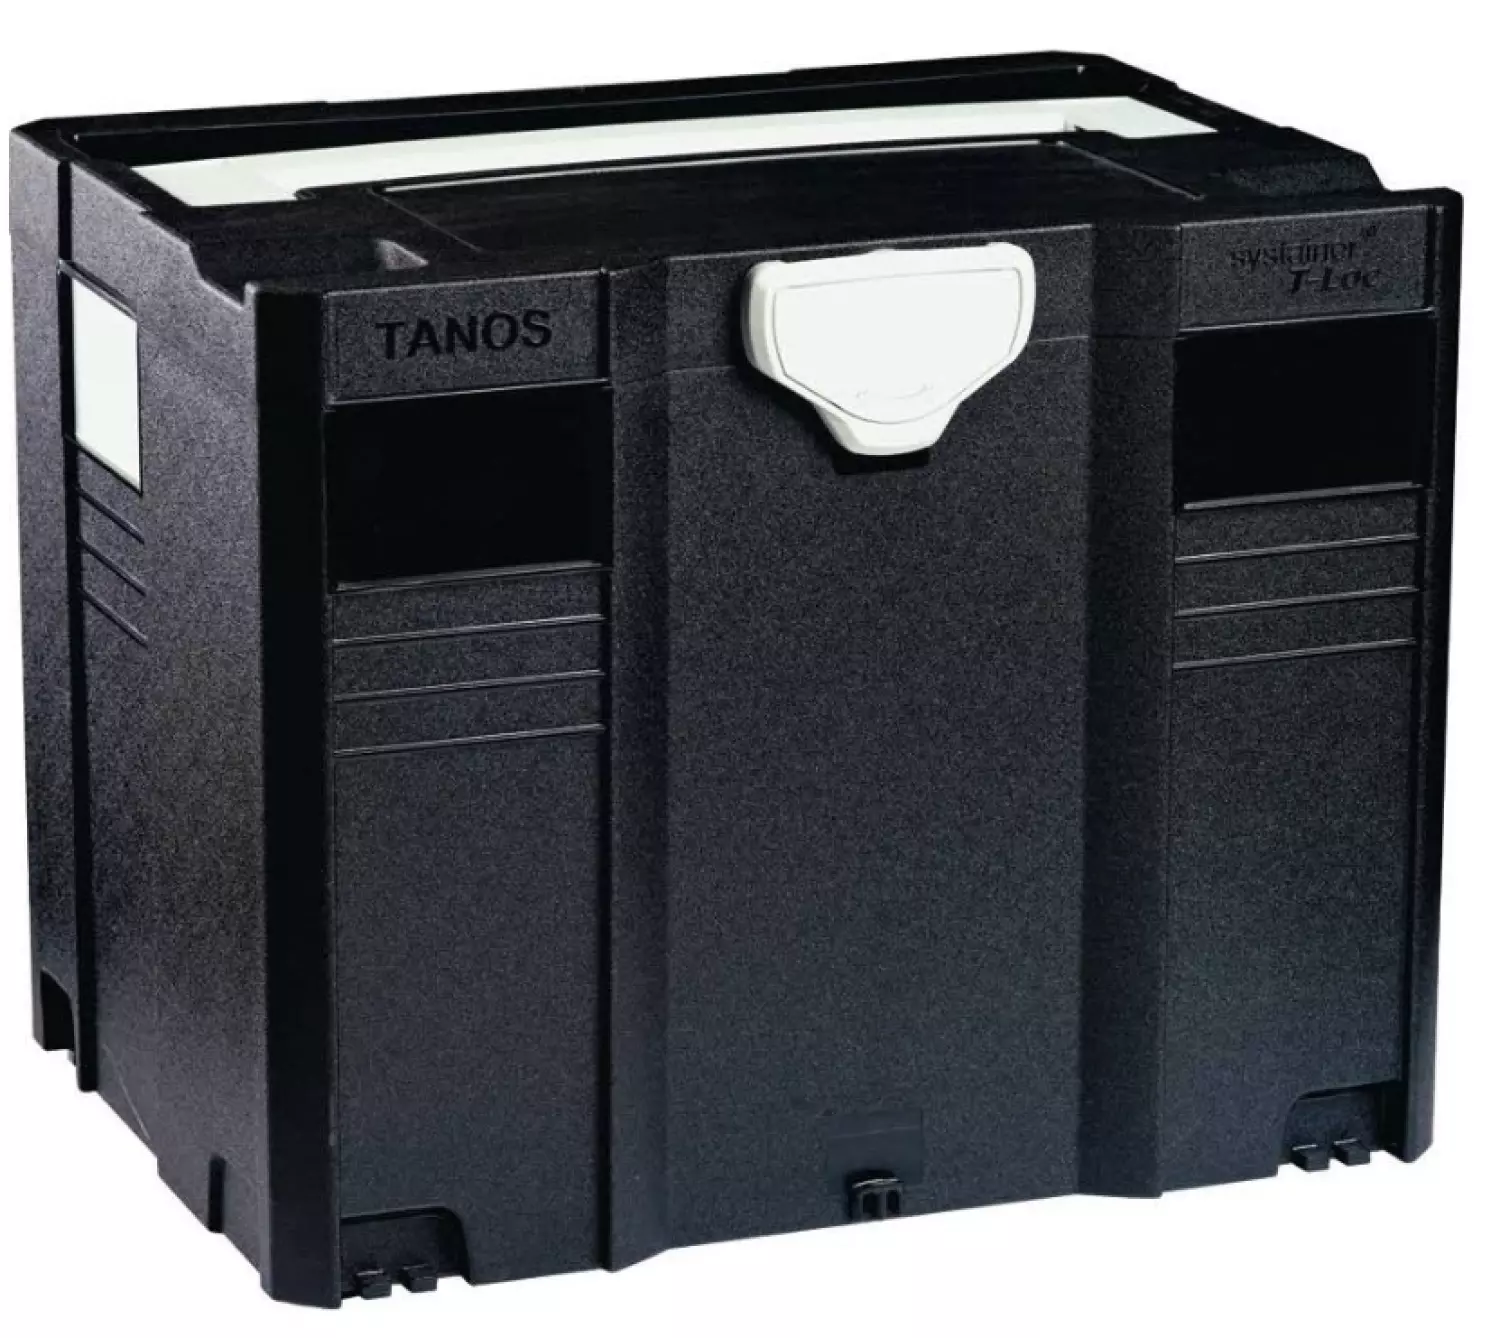 Panasonic TOOLBOX4-IN systainer met inleg voor EY4550,EY45A2,EY46A2, EY46A5 en voor combi-sets